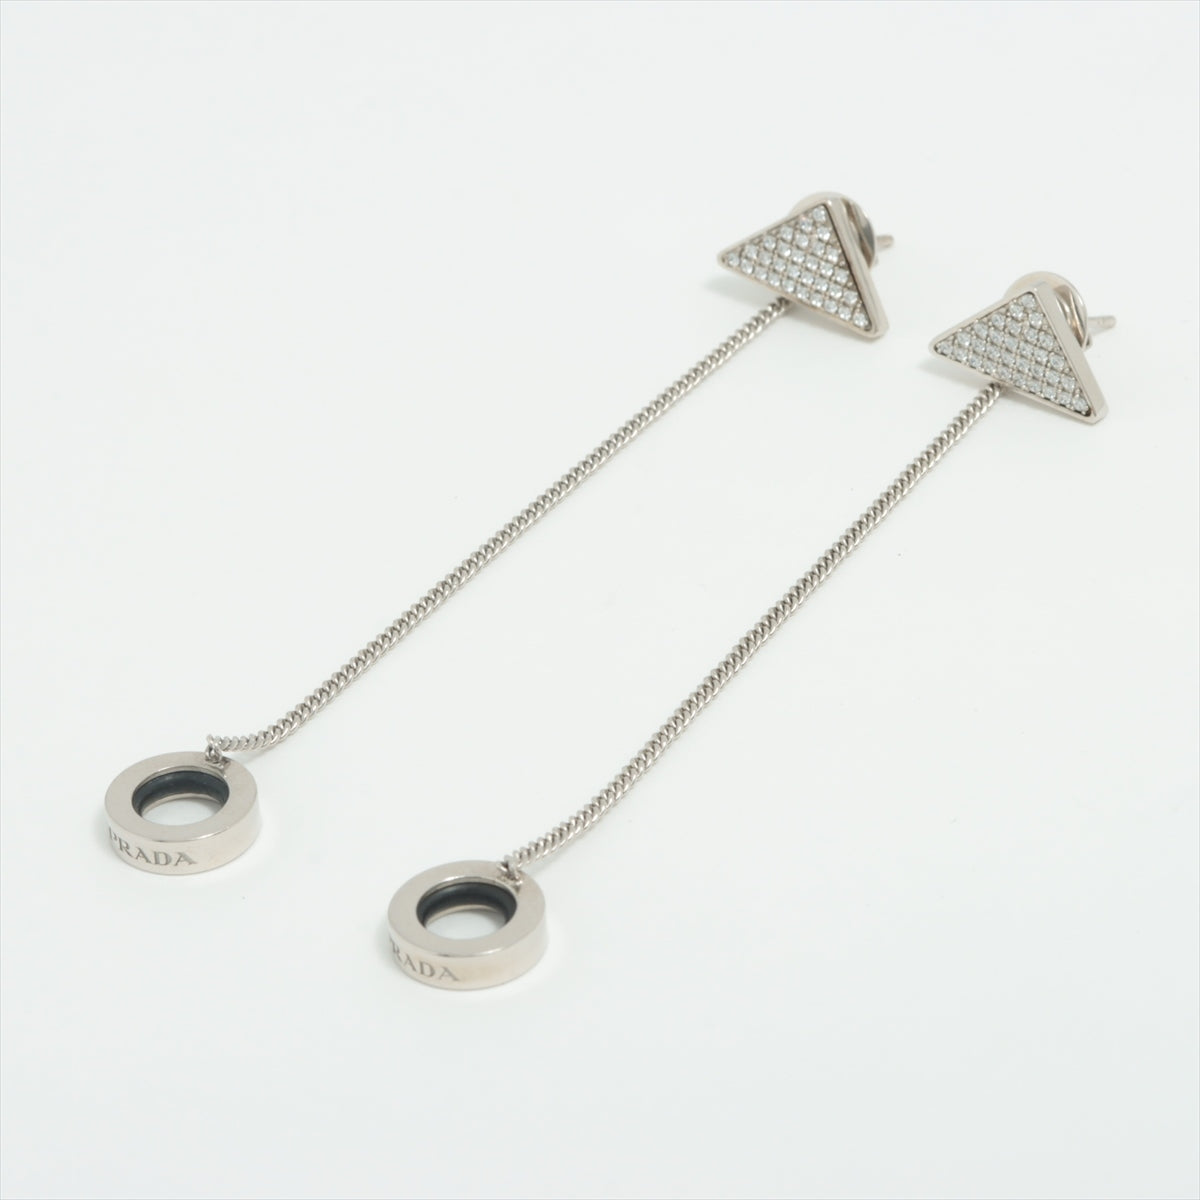 Prada Piercing jewelry (for both ears) Metal x rhinestone Silver pendant earring Crystal Logo jewel 1JO770 2DZ4 T7O